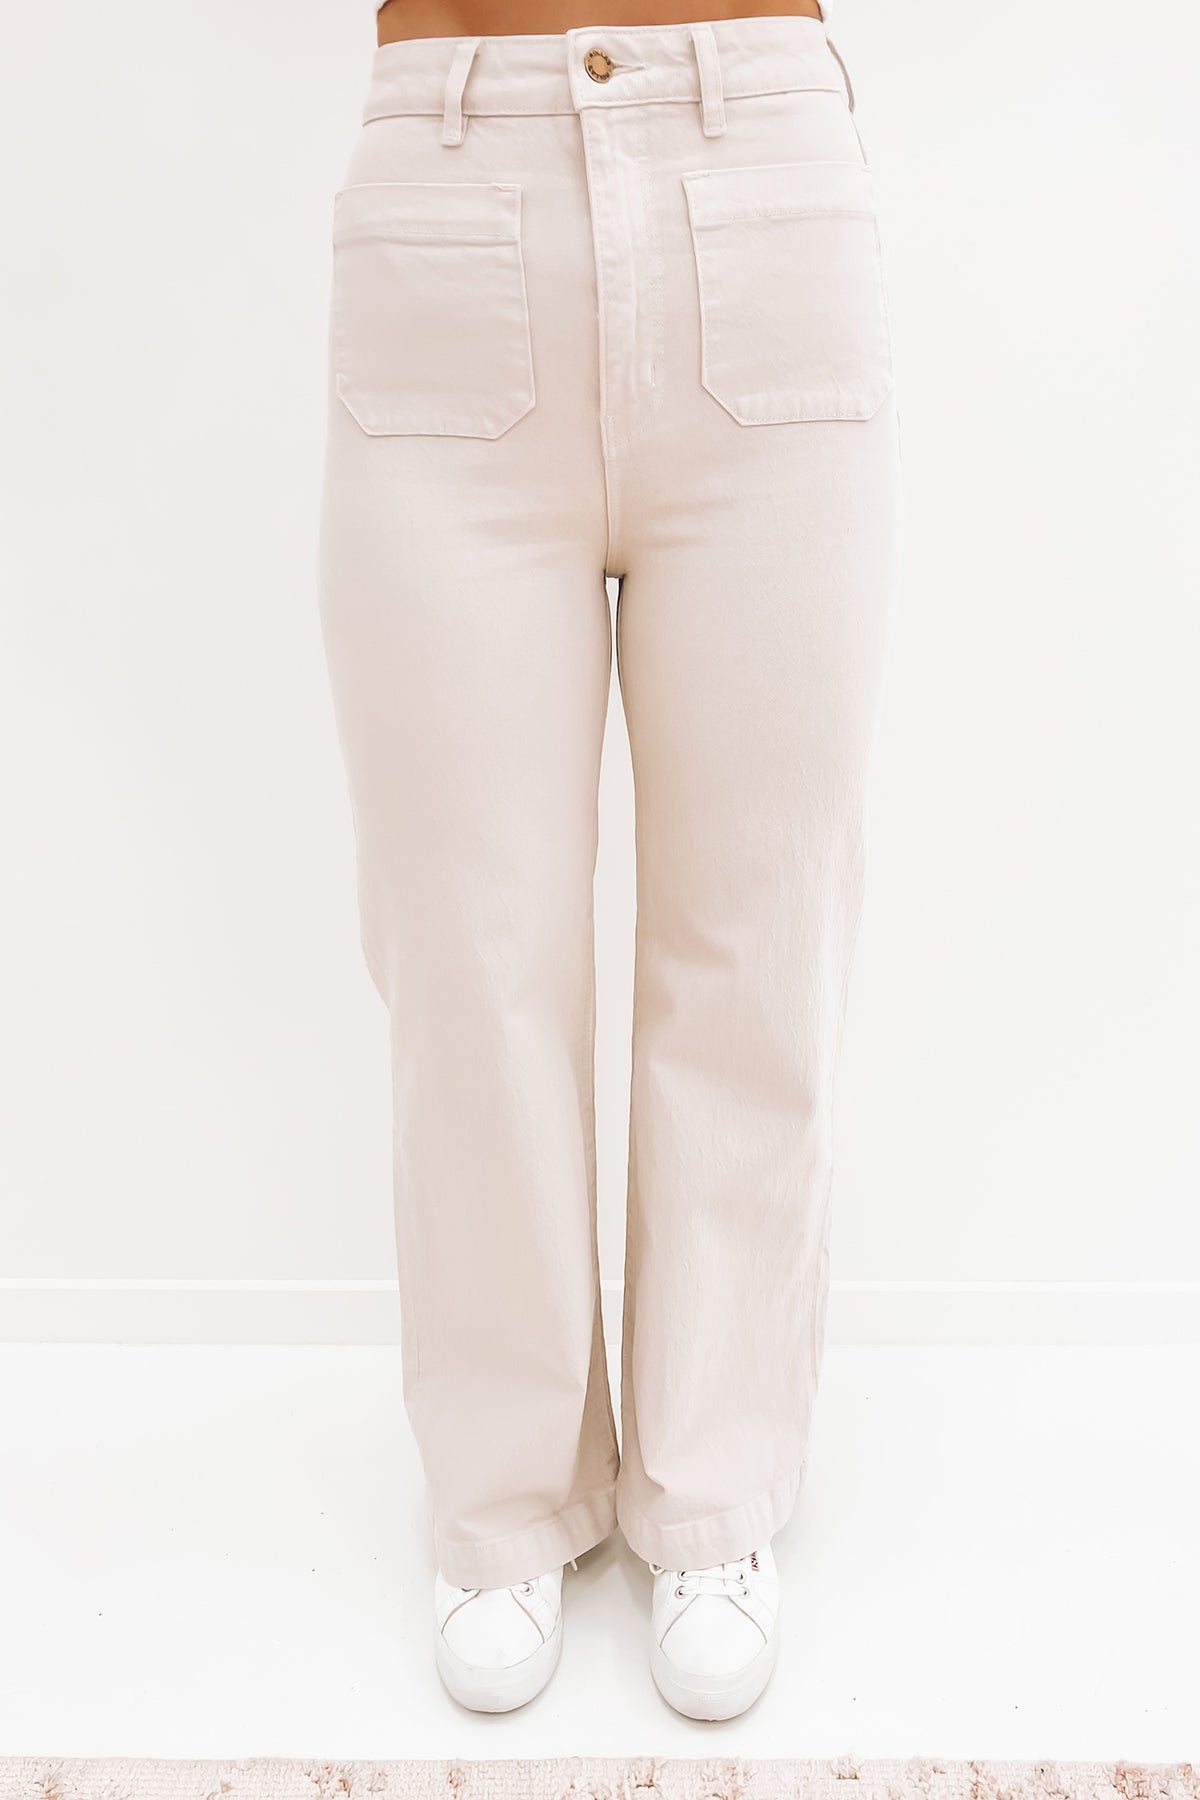 Rollas Jeans sailor jean - comfort sea on Garmentory  Fashion pants, Denim  fashion, Fashion inspo outfits